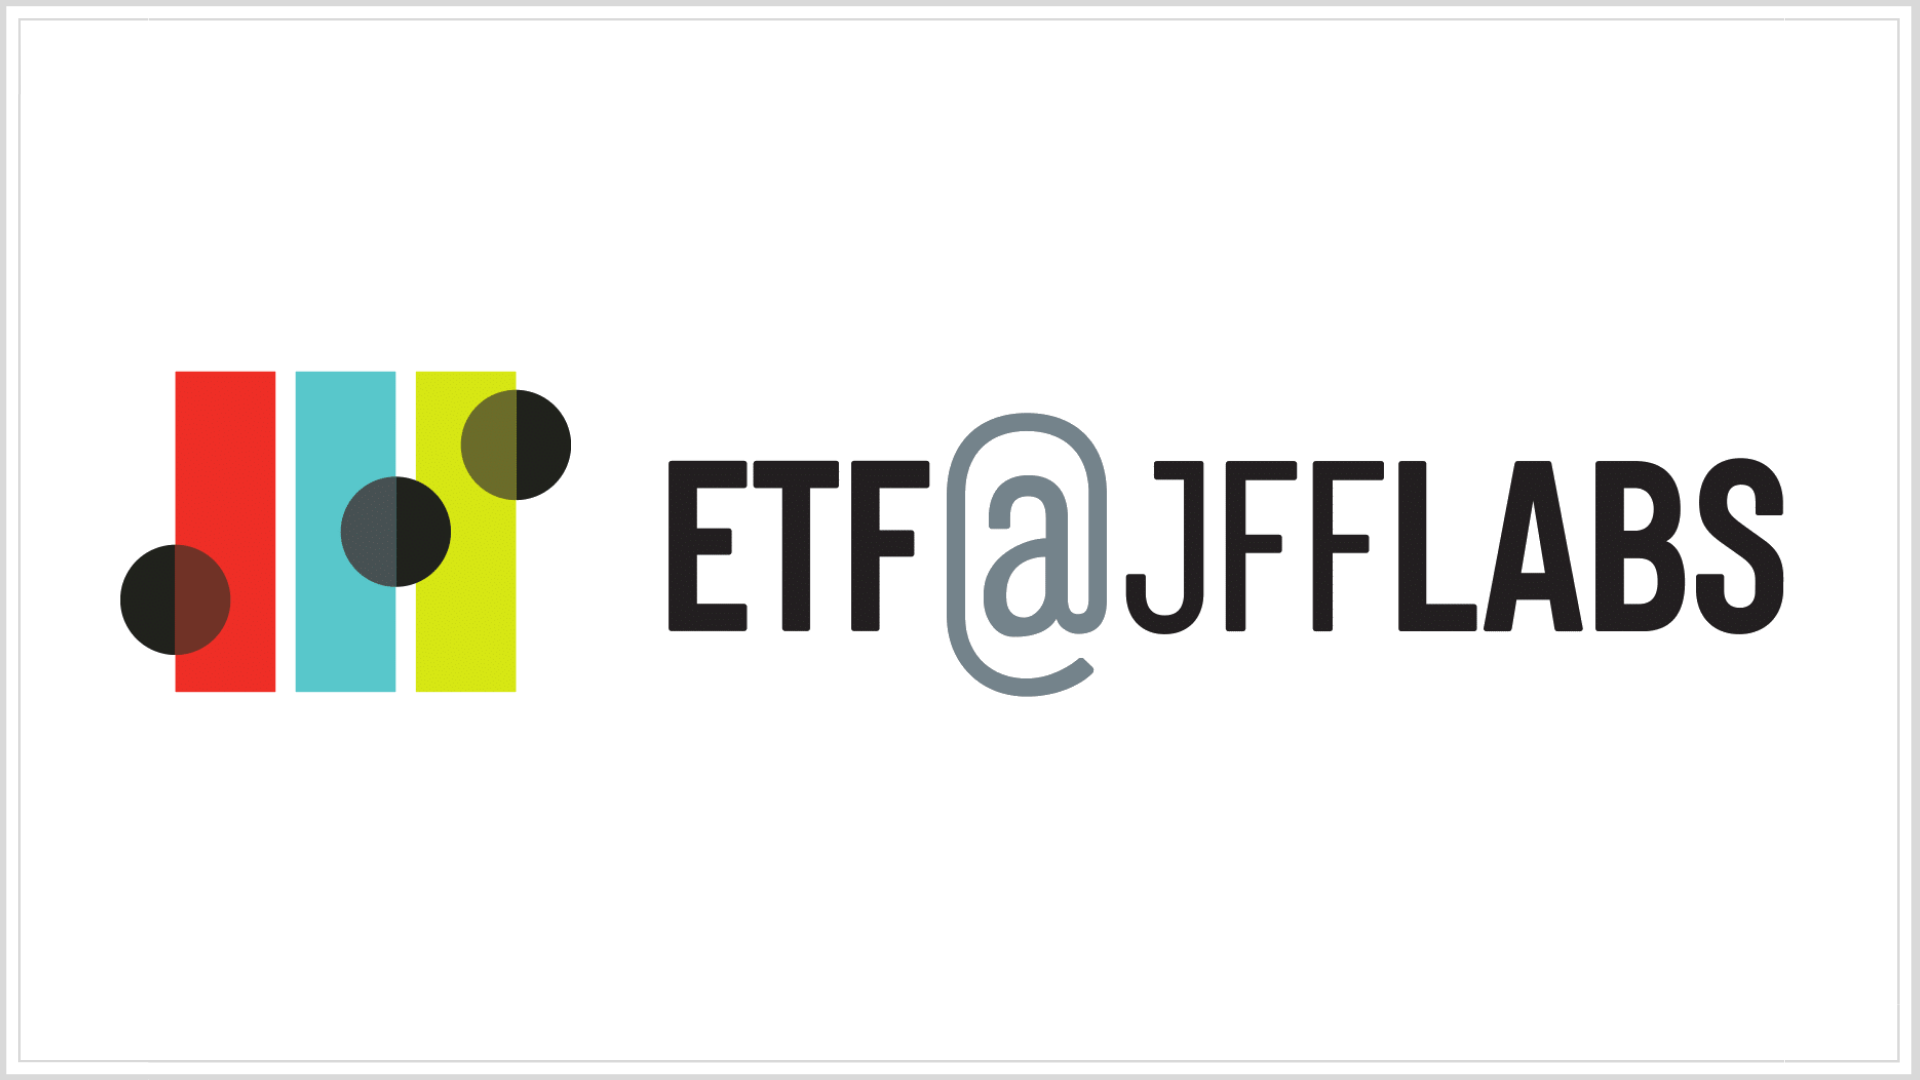 ETF@JFFLABS | Chloe Capital